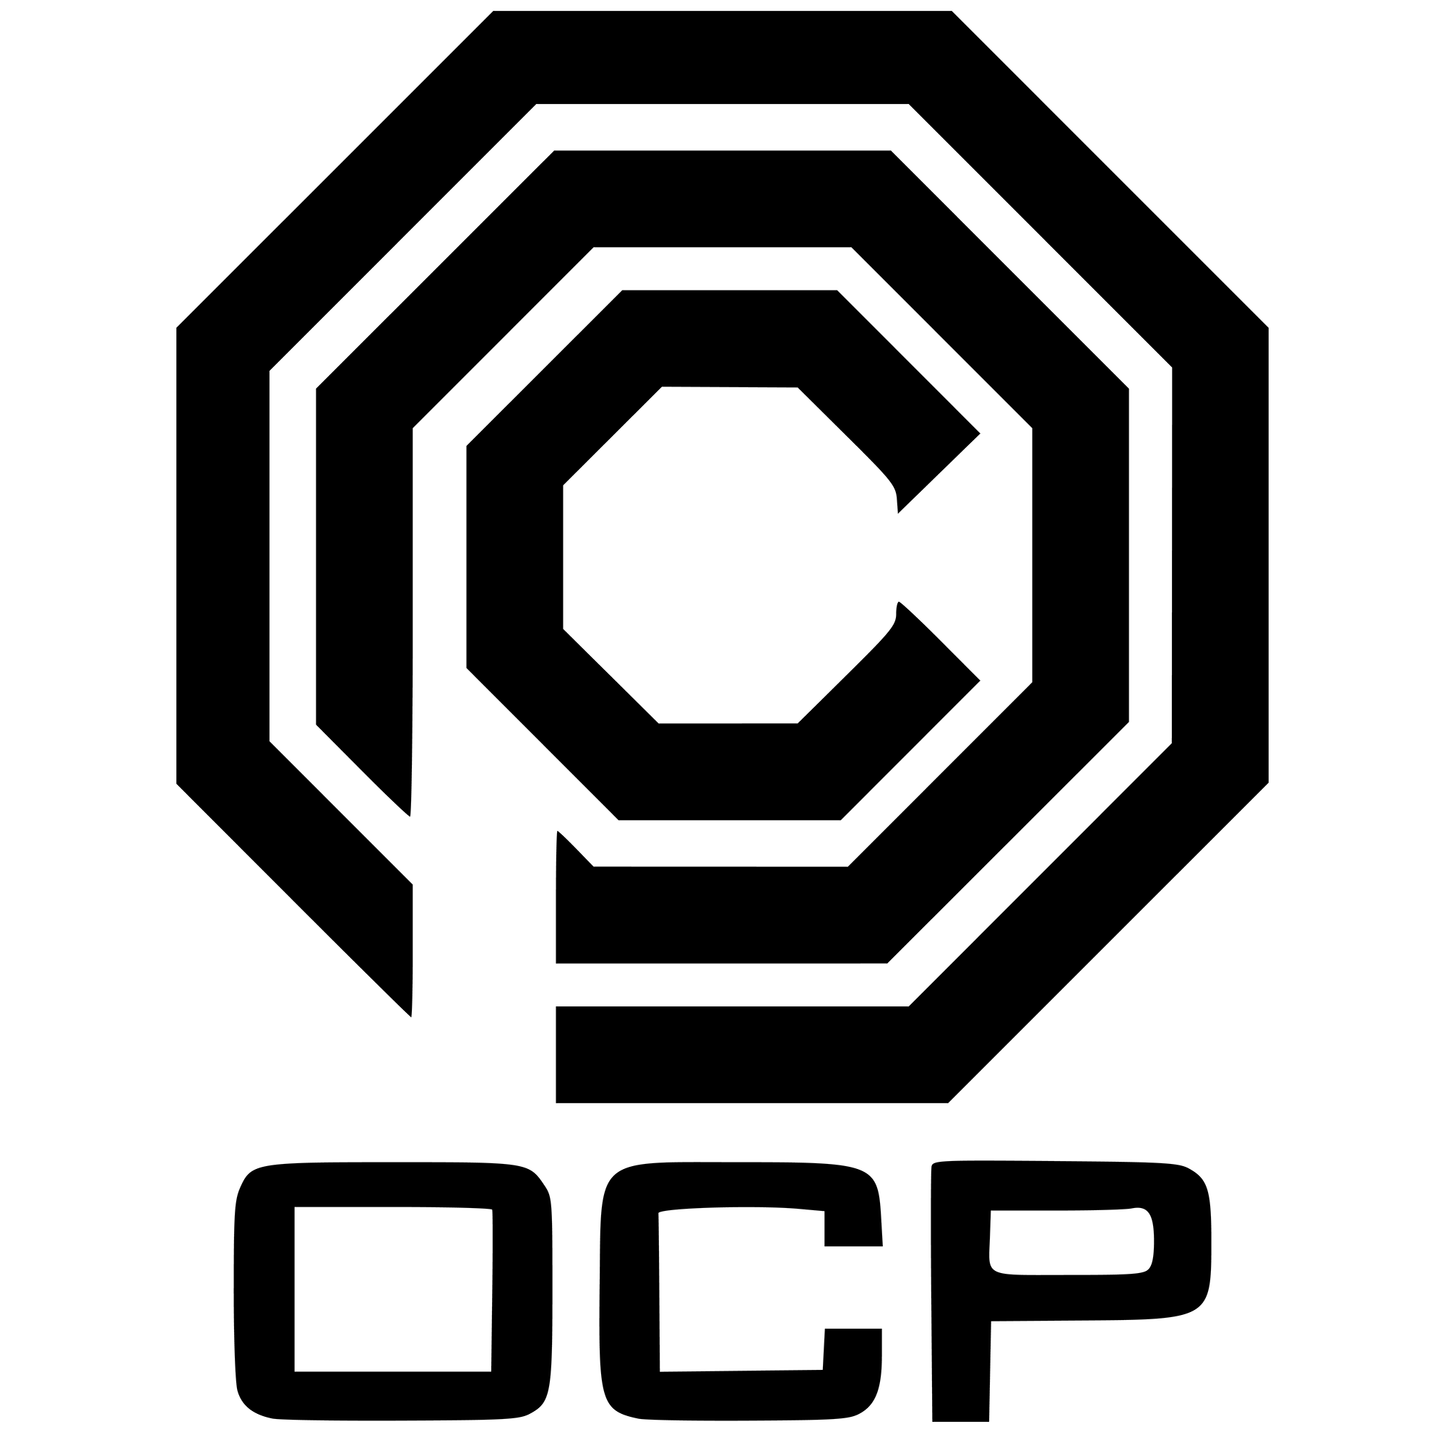 Robocop OCP Logo Vinyl Decal Sticker